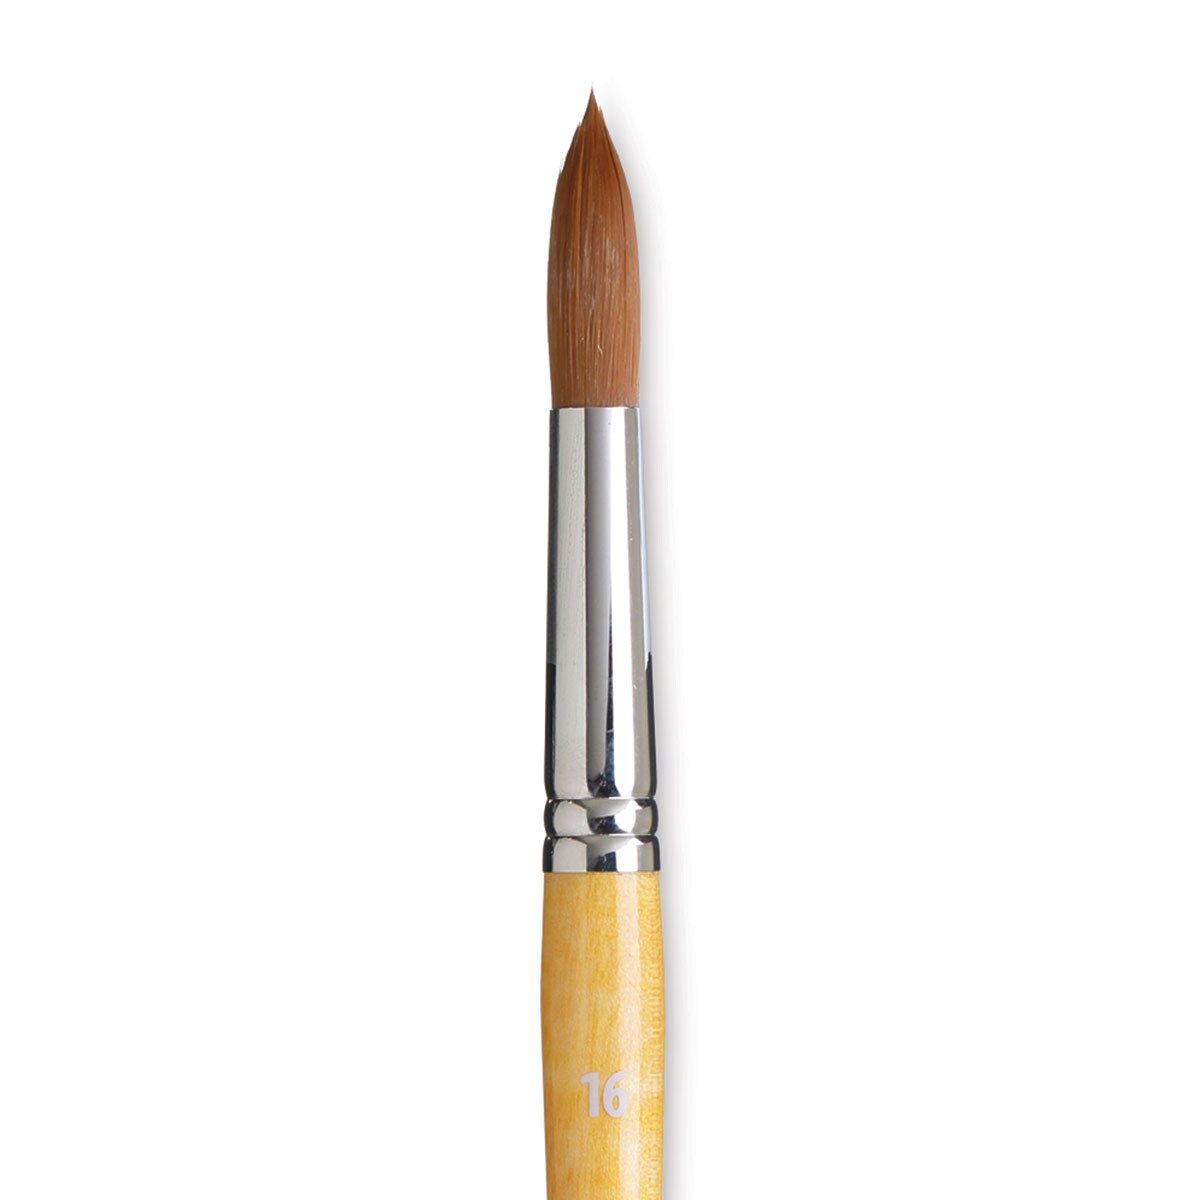 Princeton Snap! Golden Taklon Brush - Round, Short Handle, Size 16